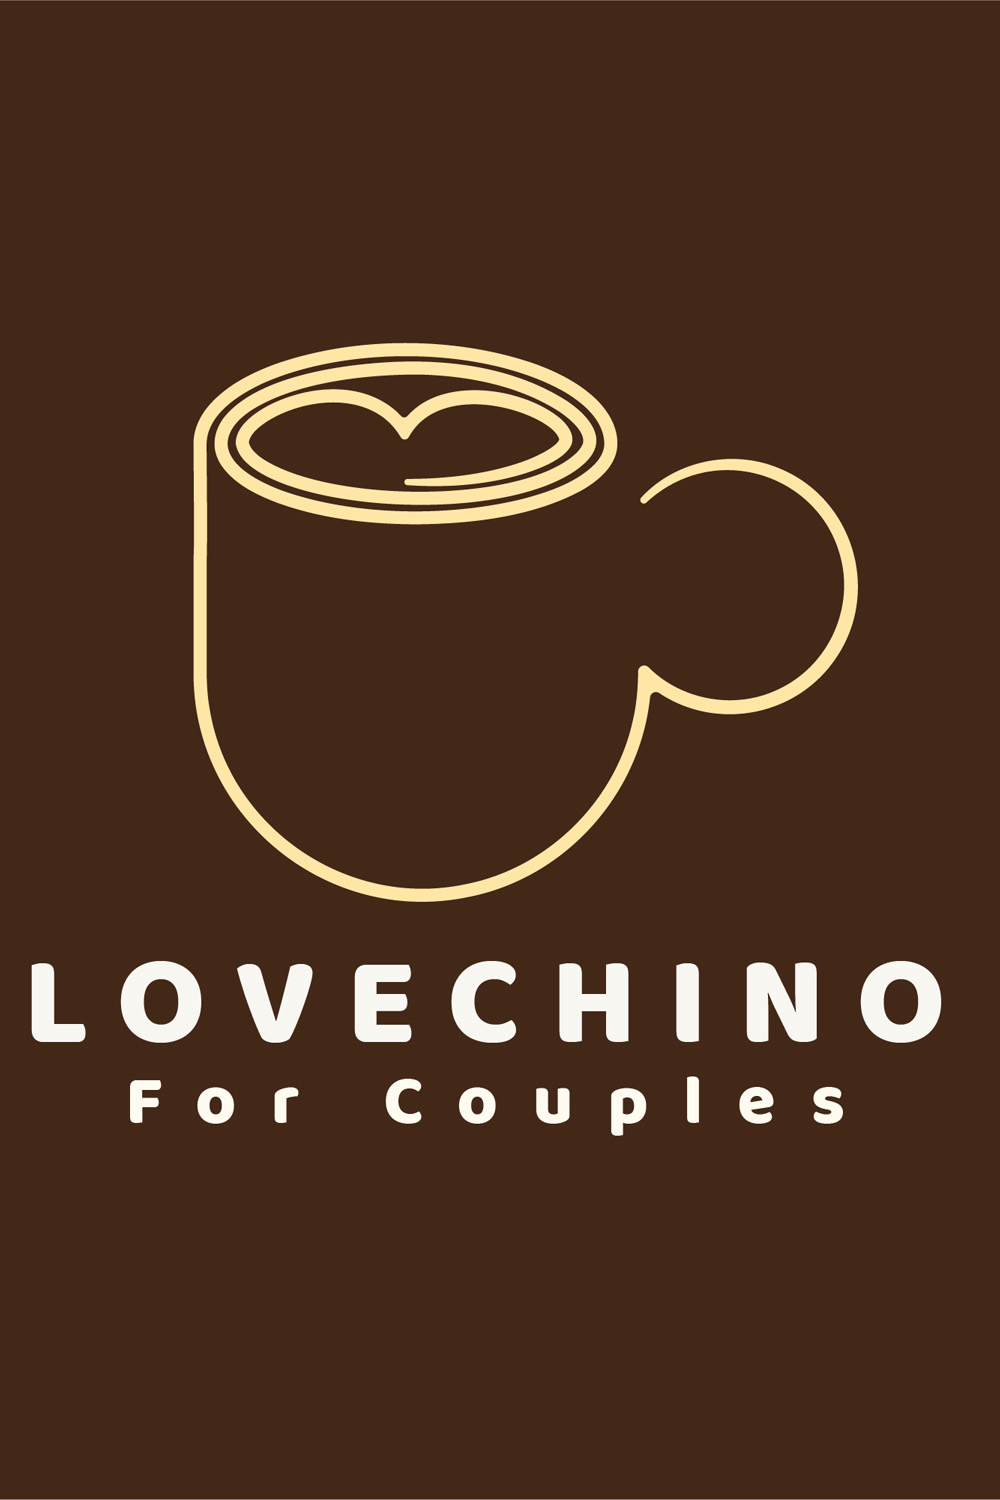 Cafe logo, Coffee logo, Love coffee logo pinterest preview image.